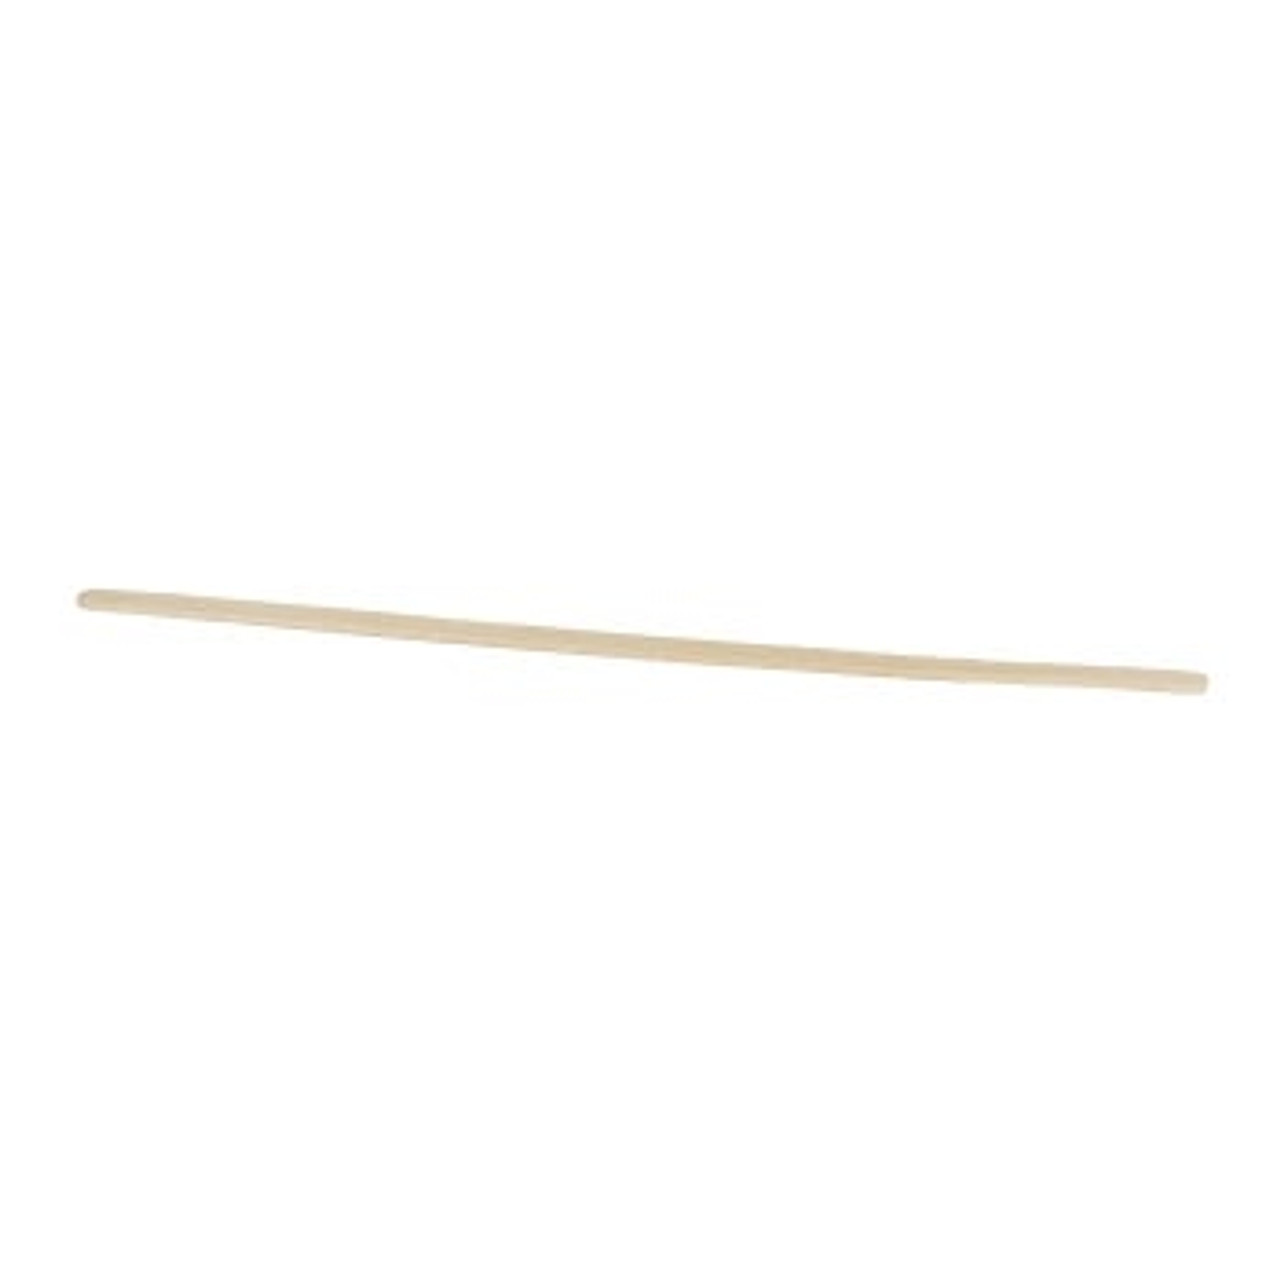 Gordon Choice Birch Wood Stir Sticks, 7In, Grade A | 1000UN/Unit, 10 Units/Case